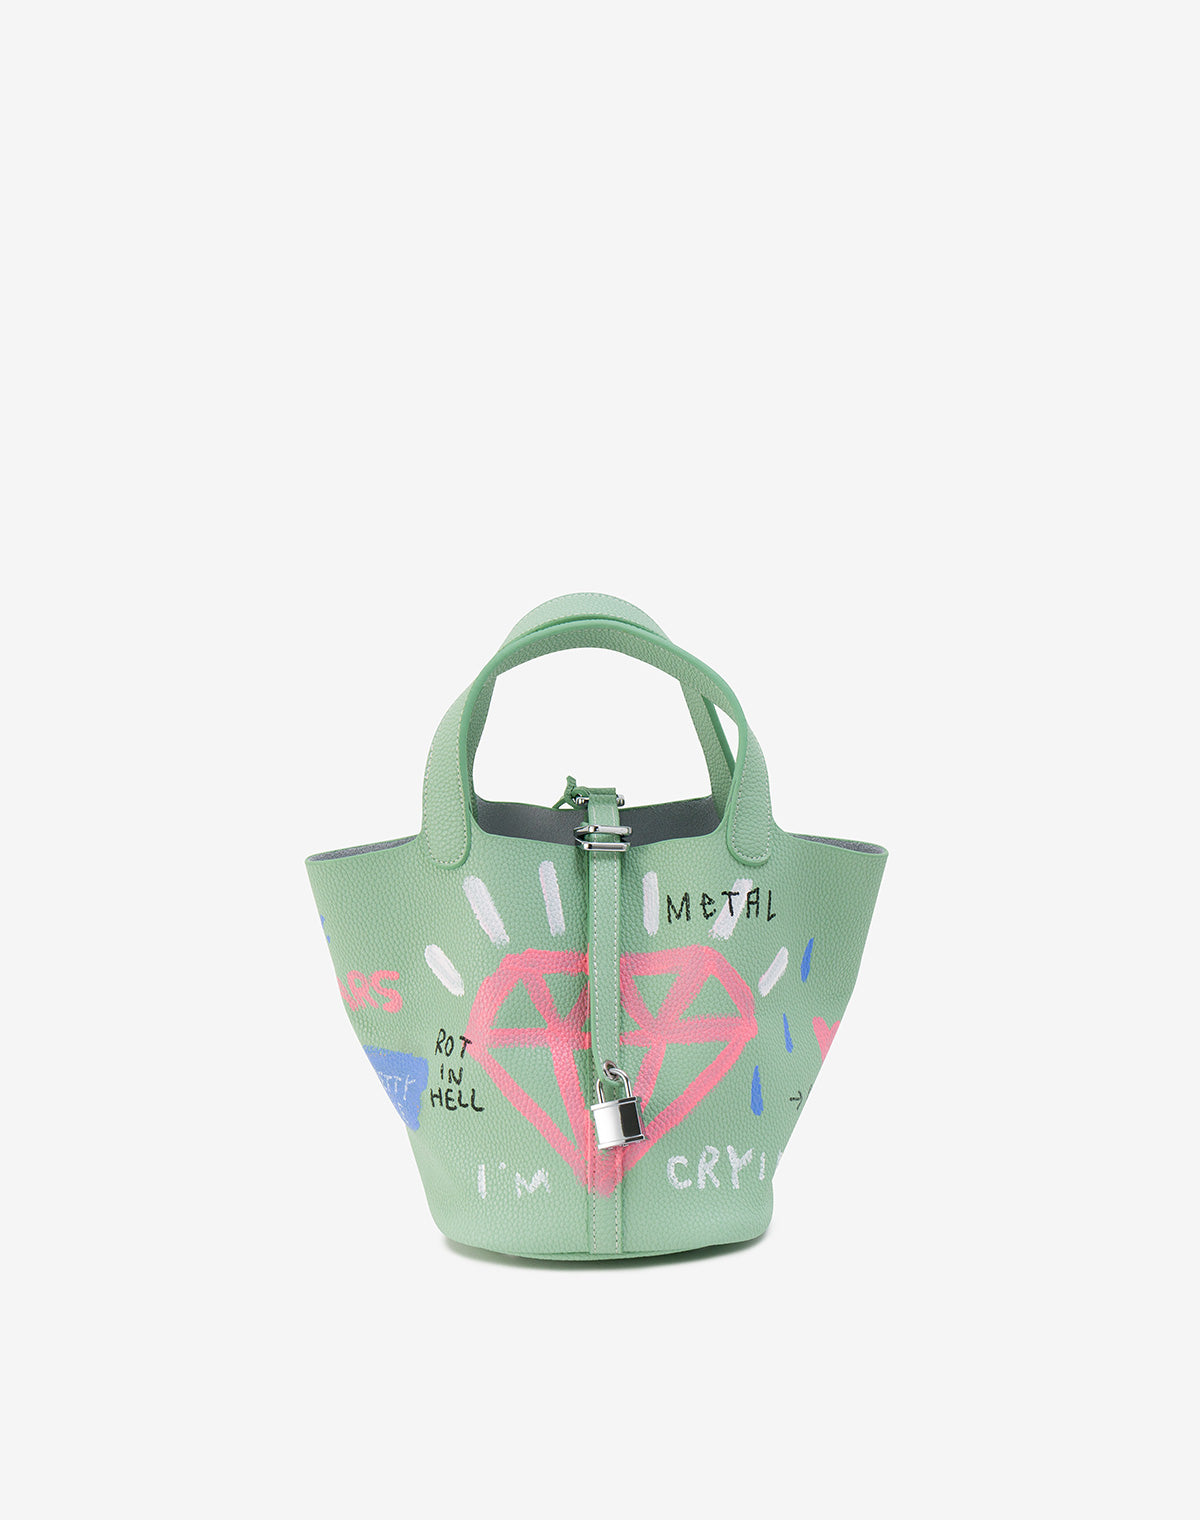 Cube Bag / size S / Mint Green – guernika official online shop